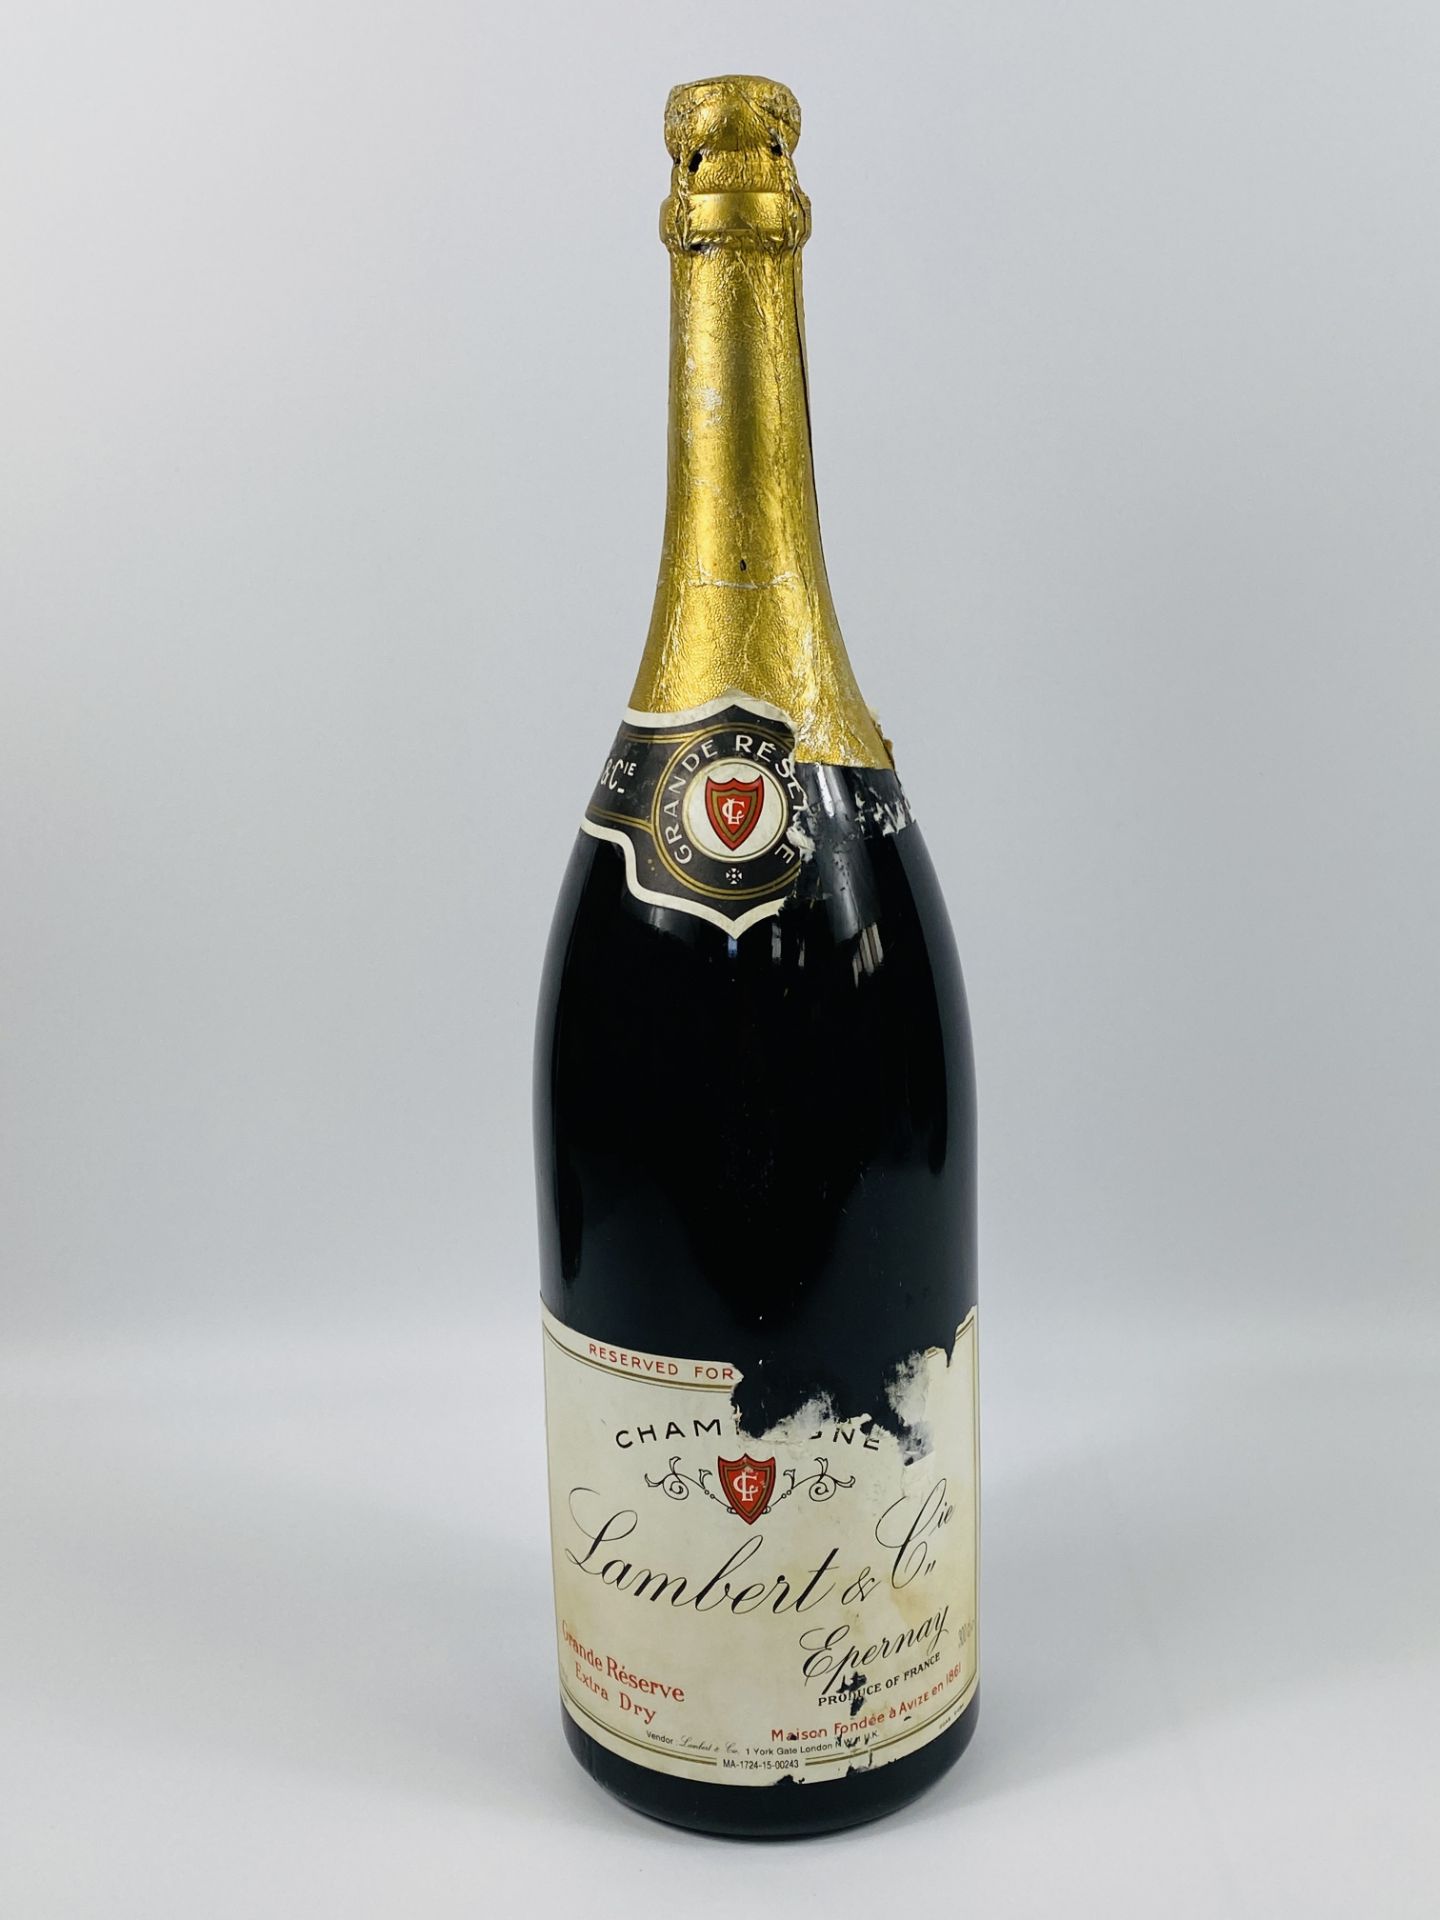 Jeroboam of Lambert & Cie champagne - Image 4 of 4